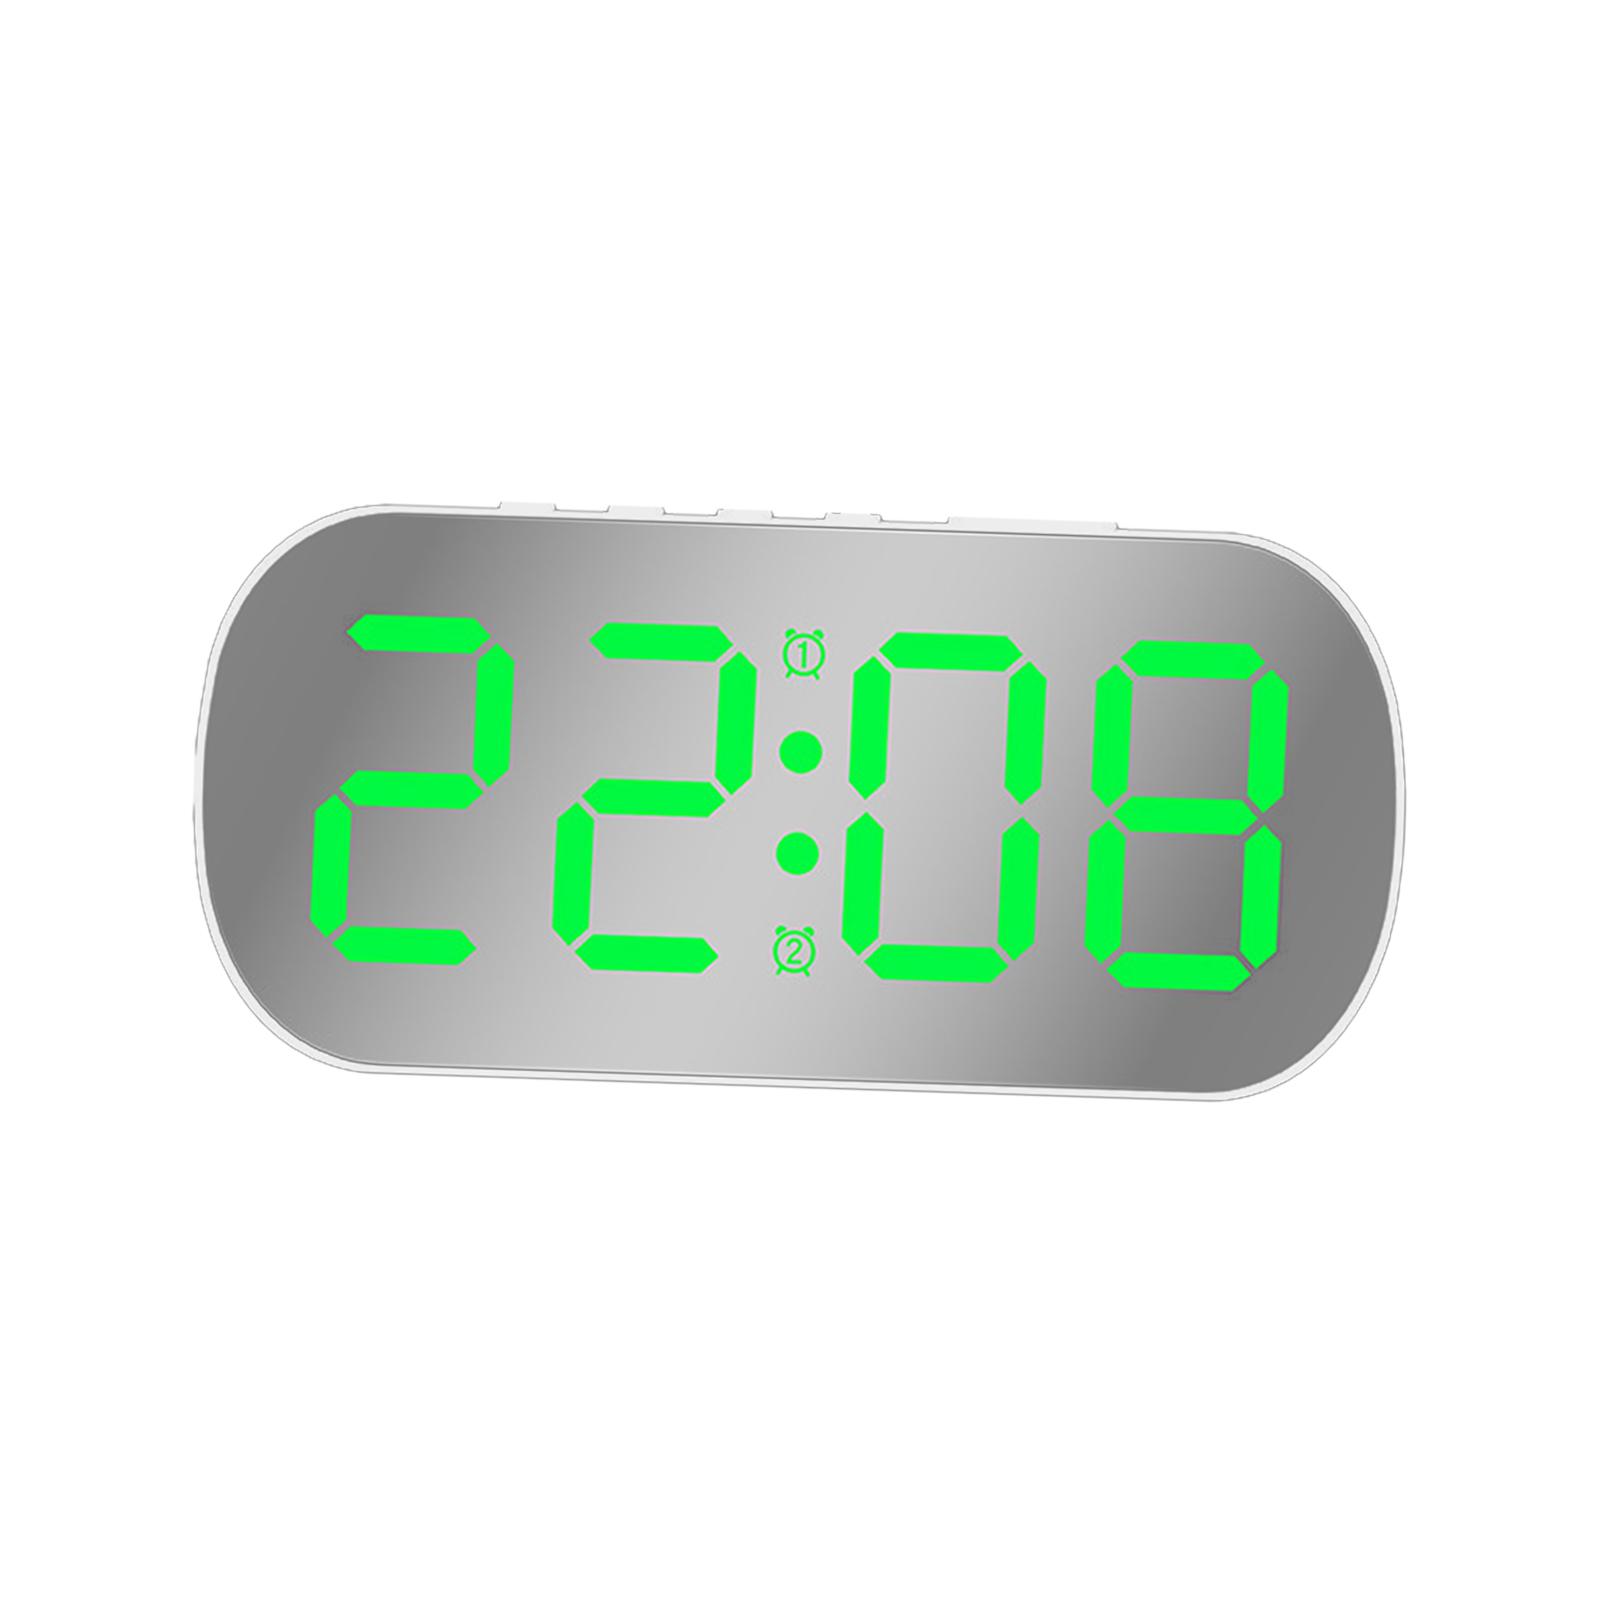 Digital Alarm Clock Mirrored Large Display 5 Adjustable Brightness LED Clock White Green LED